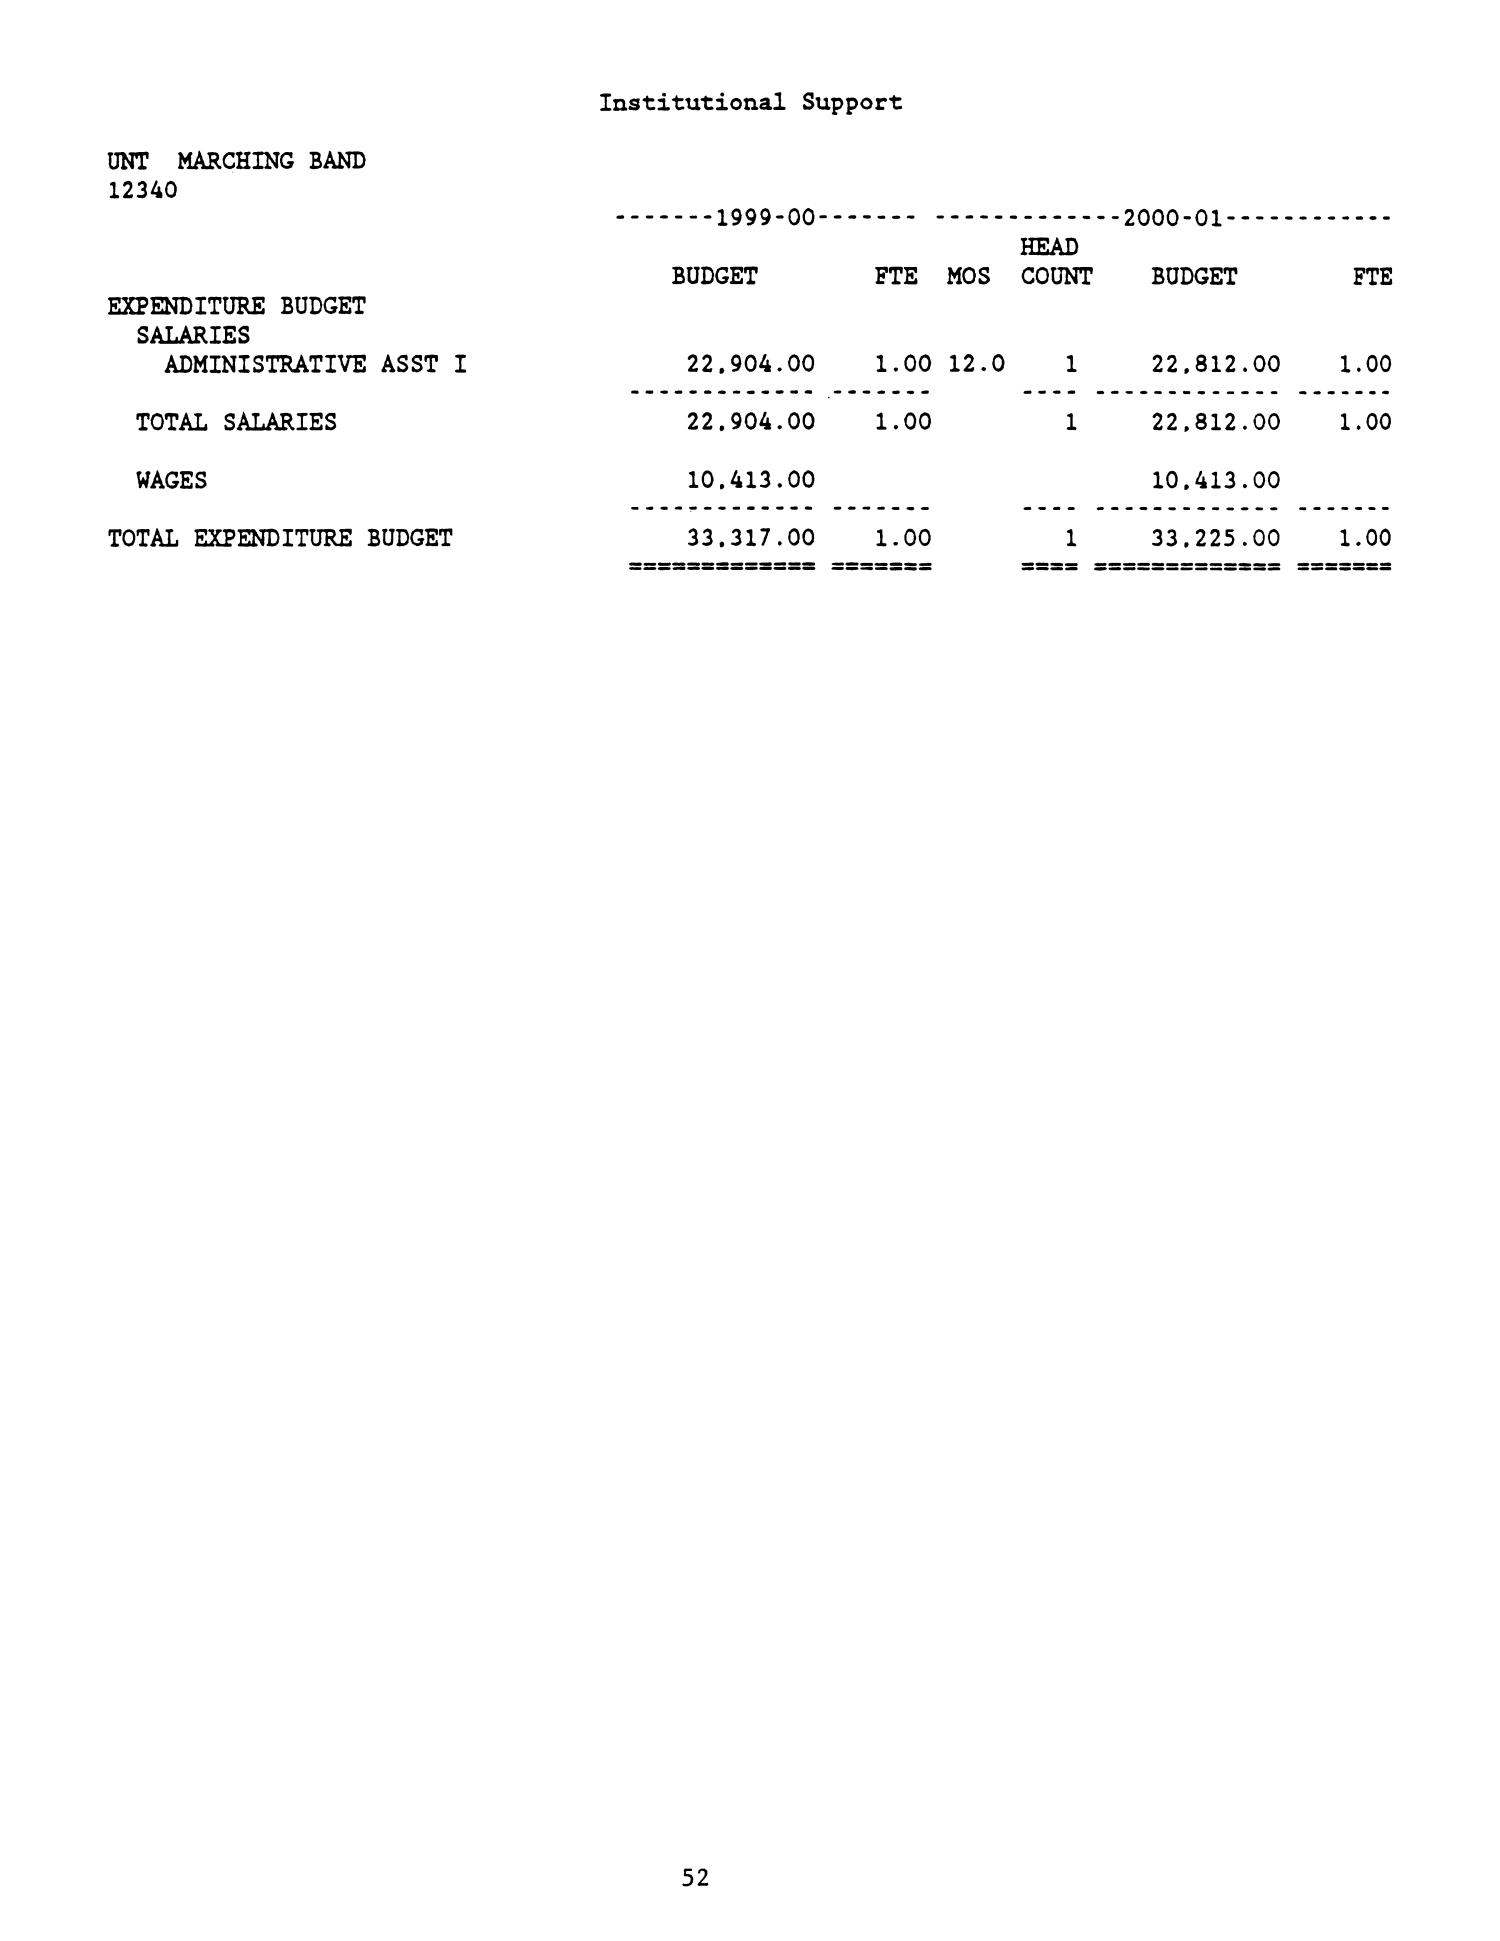 University of North Texas Budget: 2000-2001, Volume 1
                                                
                                                    52
                                                